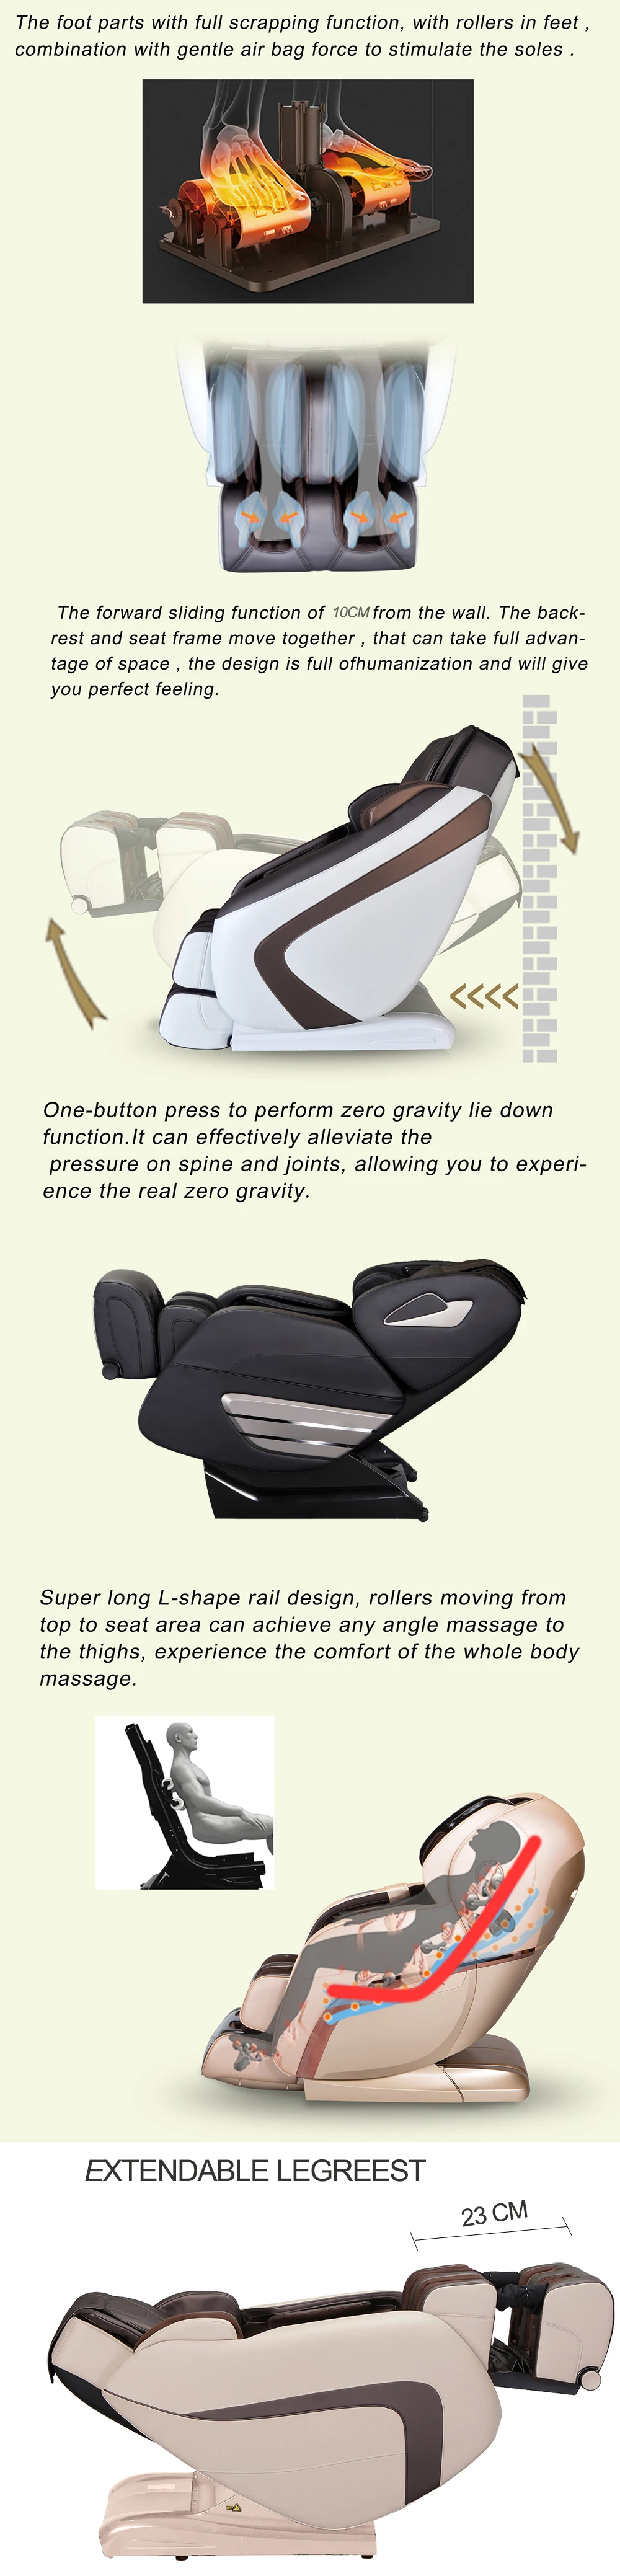 China COMTEK RK1901E L Rail 2D Micro Space Forward Sliding Zero Gravity 6 roller Massage Chair